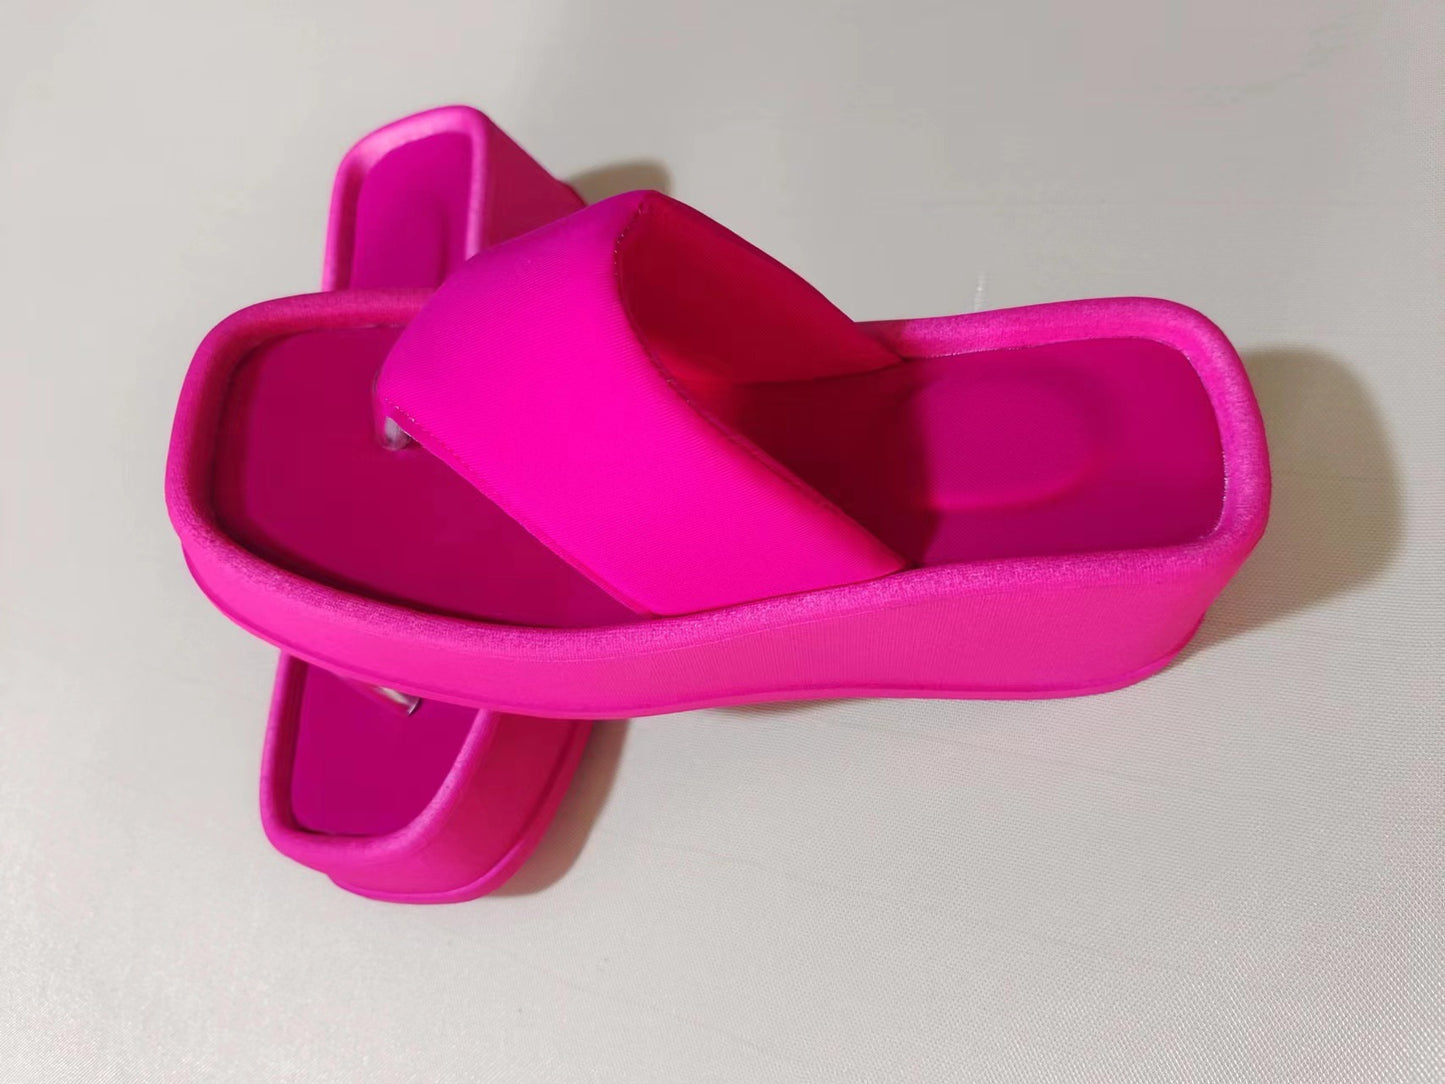 BamBam Summer Platform Square Toe Slippers Fashion Plus Size Women's Sandals Platform Flip Flops - BamBam